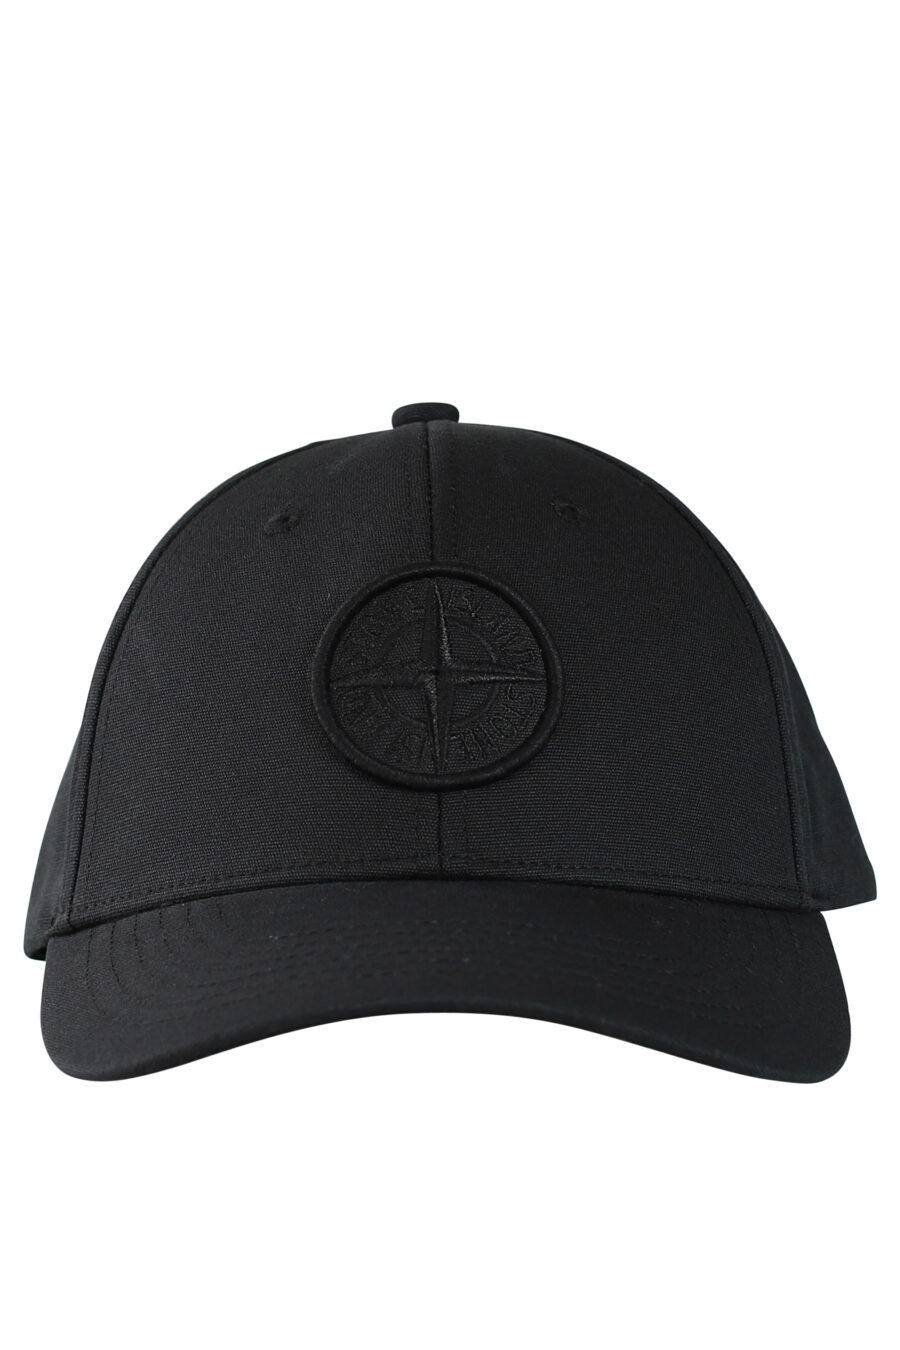 Schwarze Kappe mit kreisförmigem Logo - Fotos 531